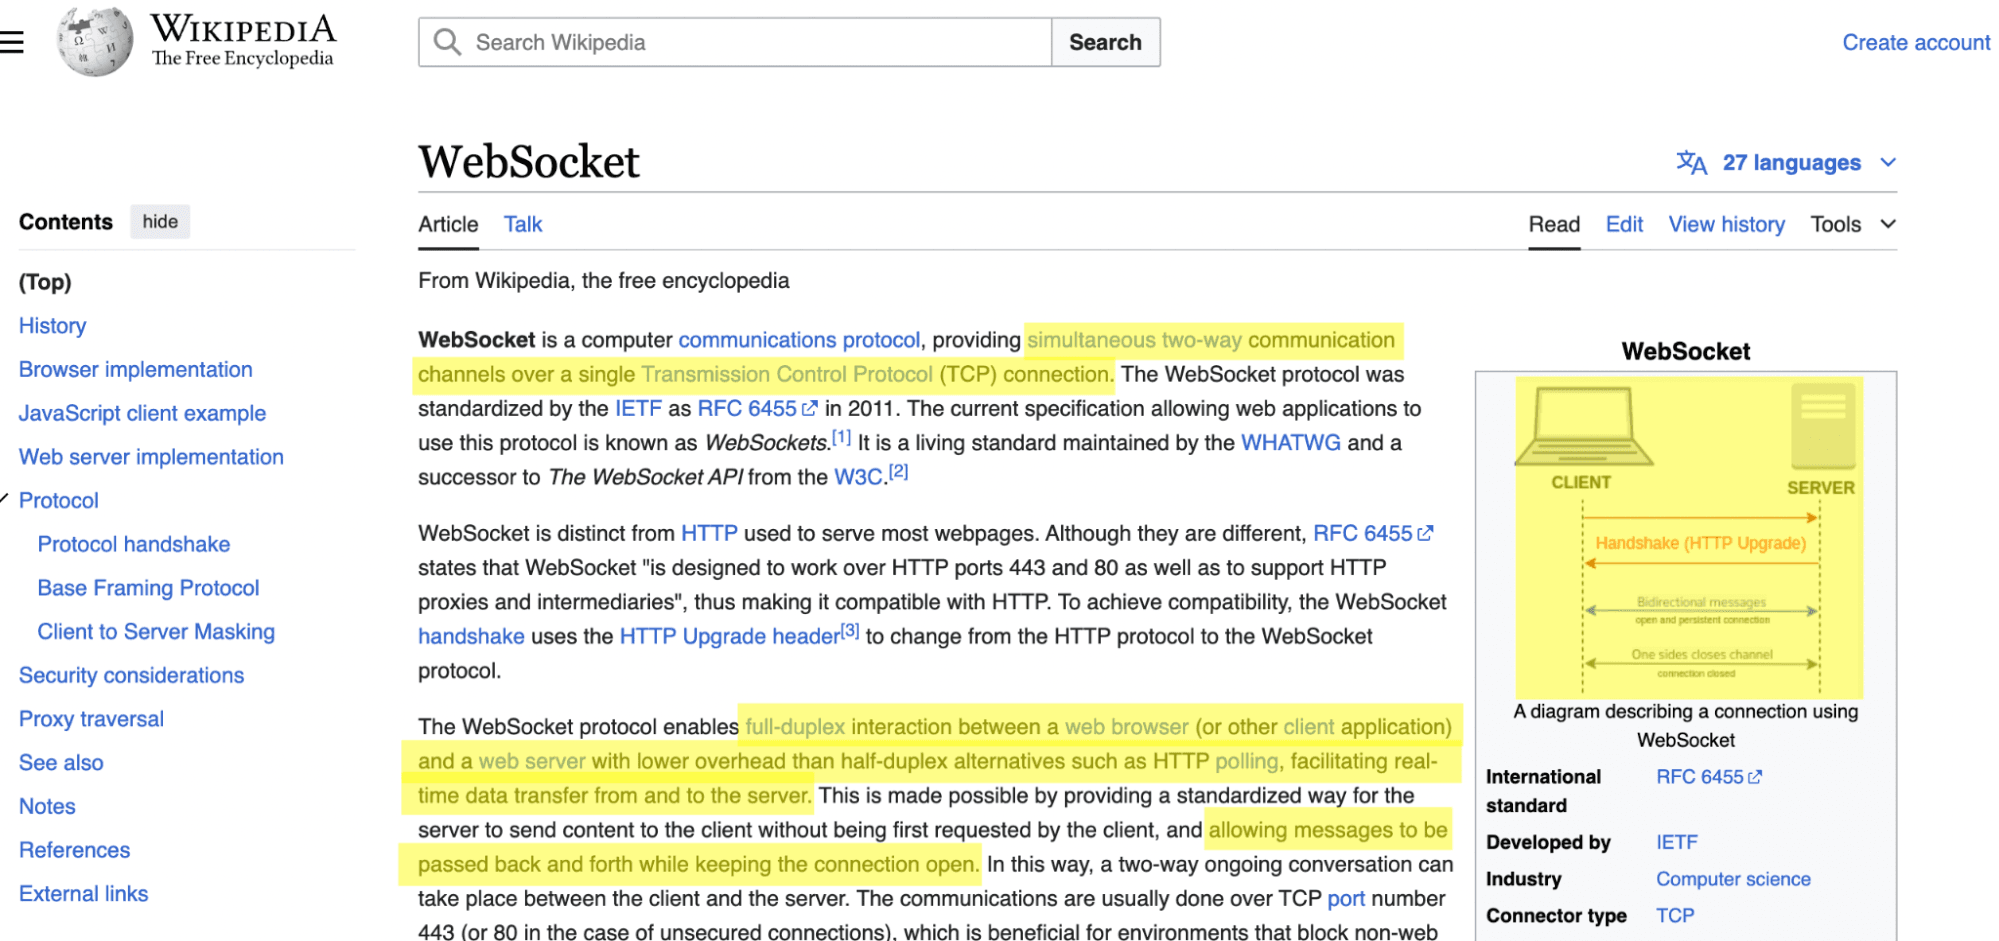 websocket wikipedia page - image11.png